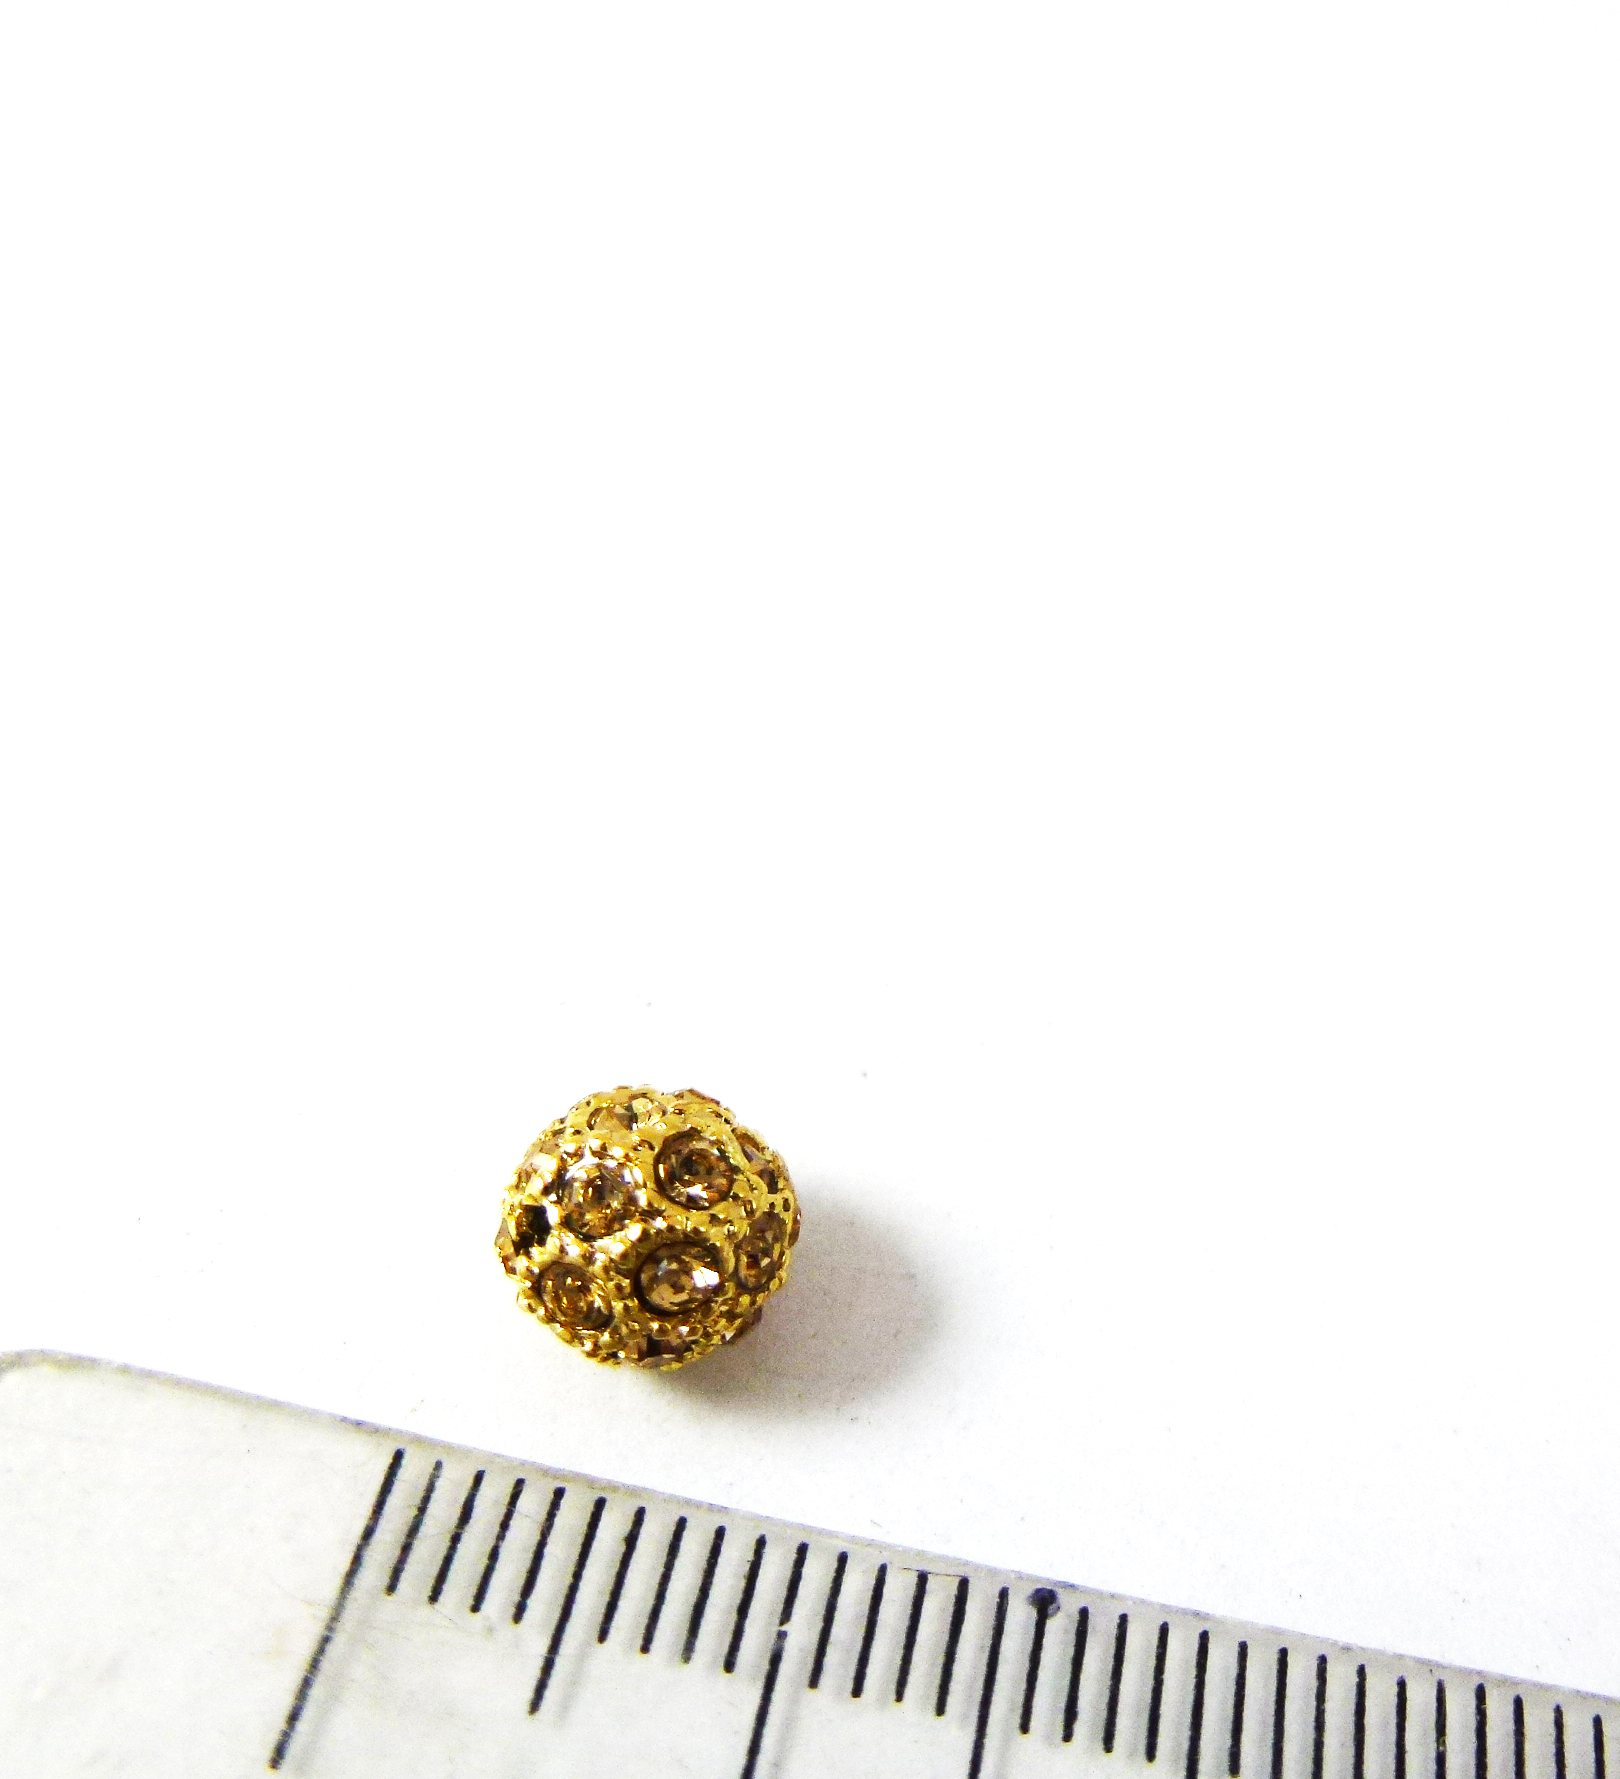 7mm銅鍍金色鑽球-影子金